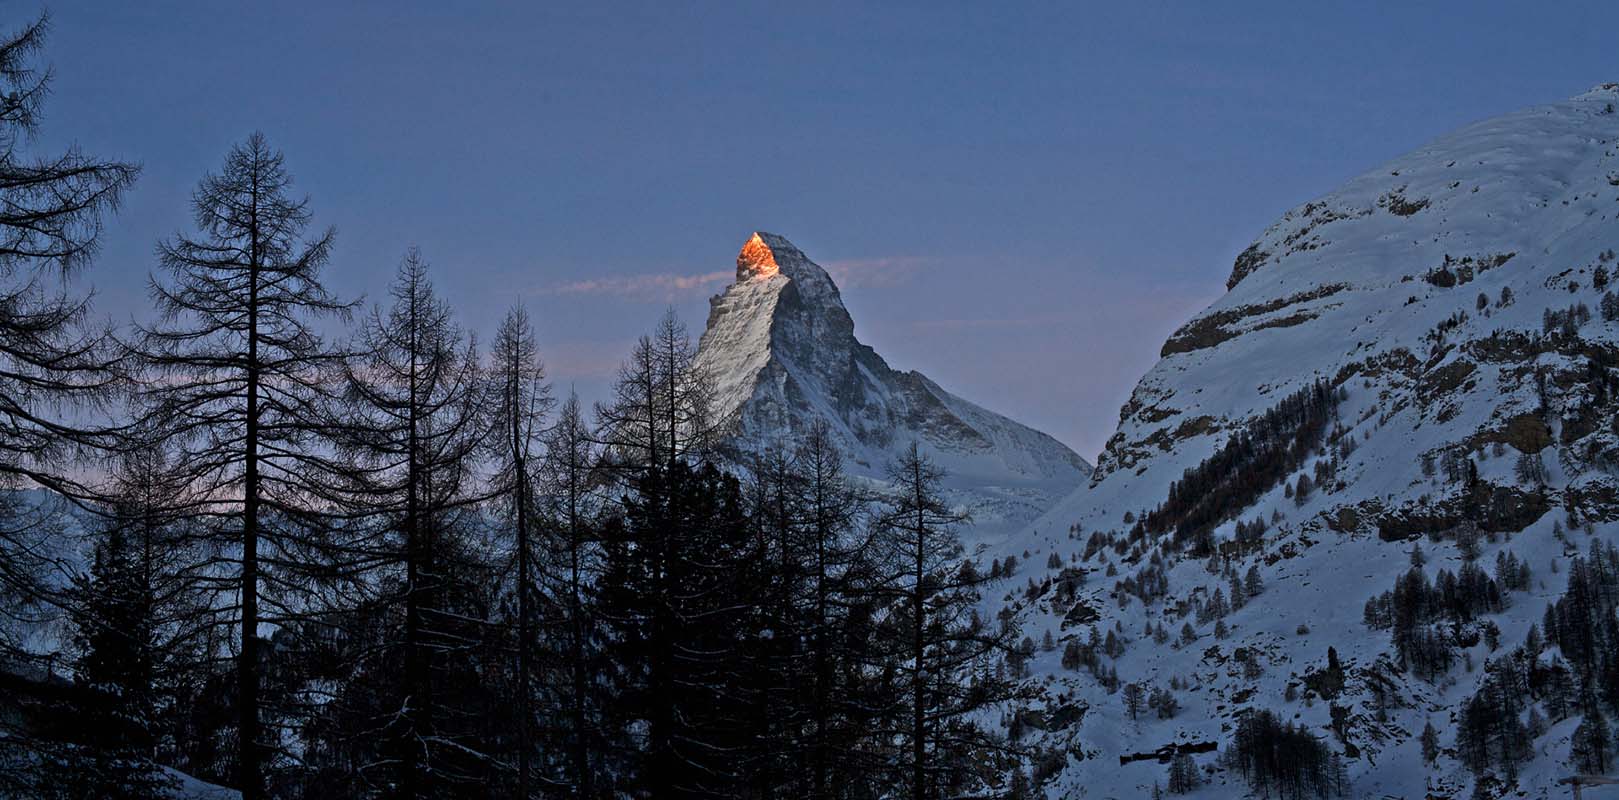 Summit of a Mountain - Switzerland